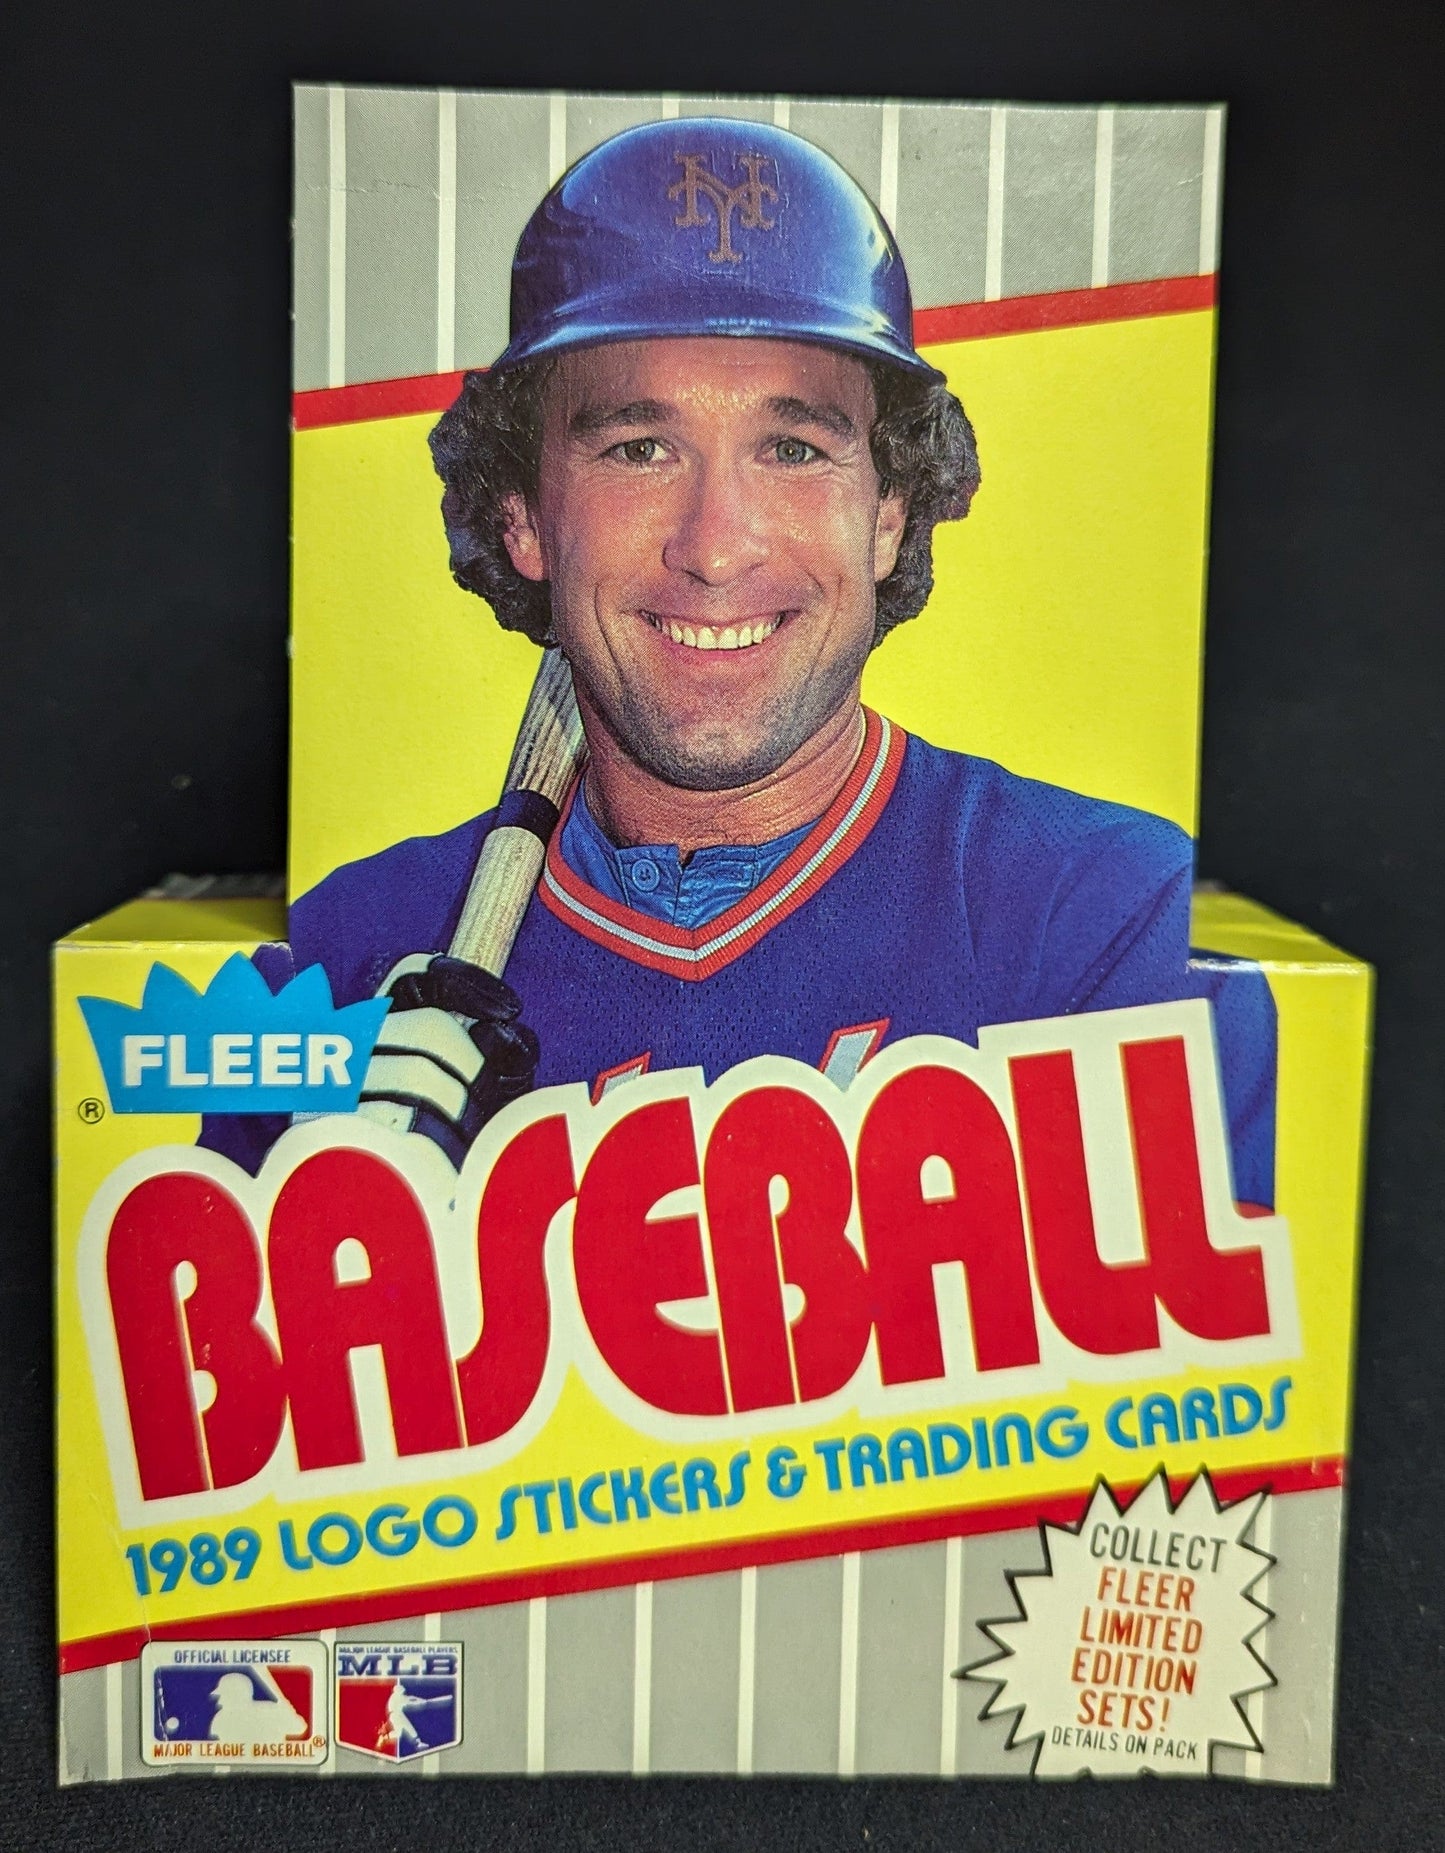 FIINR Baseball Card 1989 Vintage Fleer Wax Box Bottom of Uncut Cards - Chris Sabo - Kirk Gibson - Darryl Strawberry - Rare Mets logo